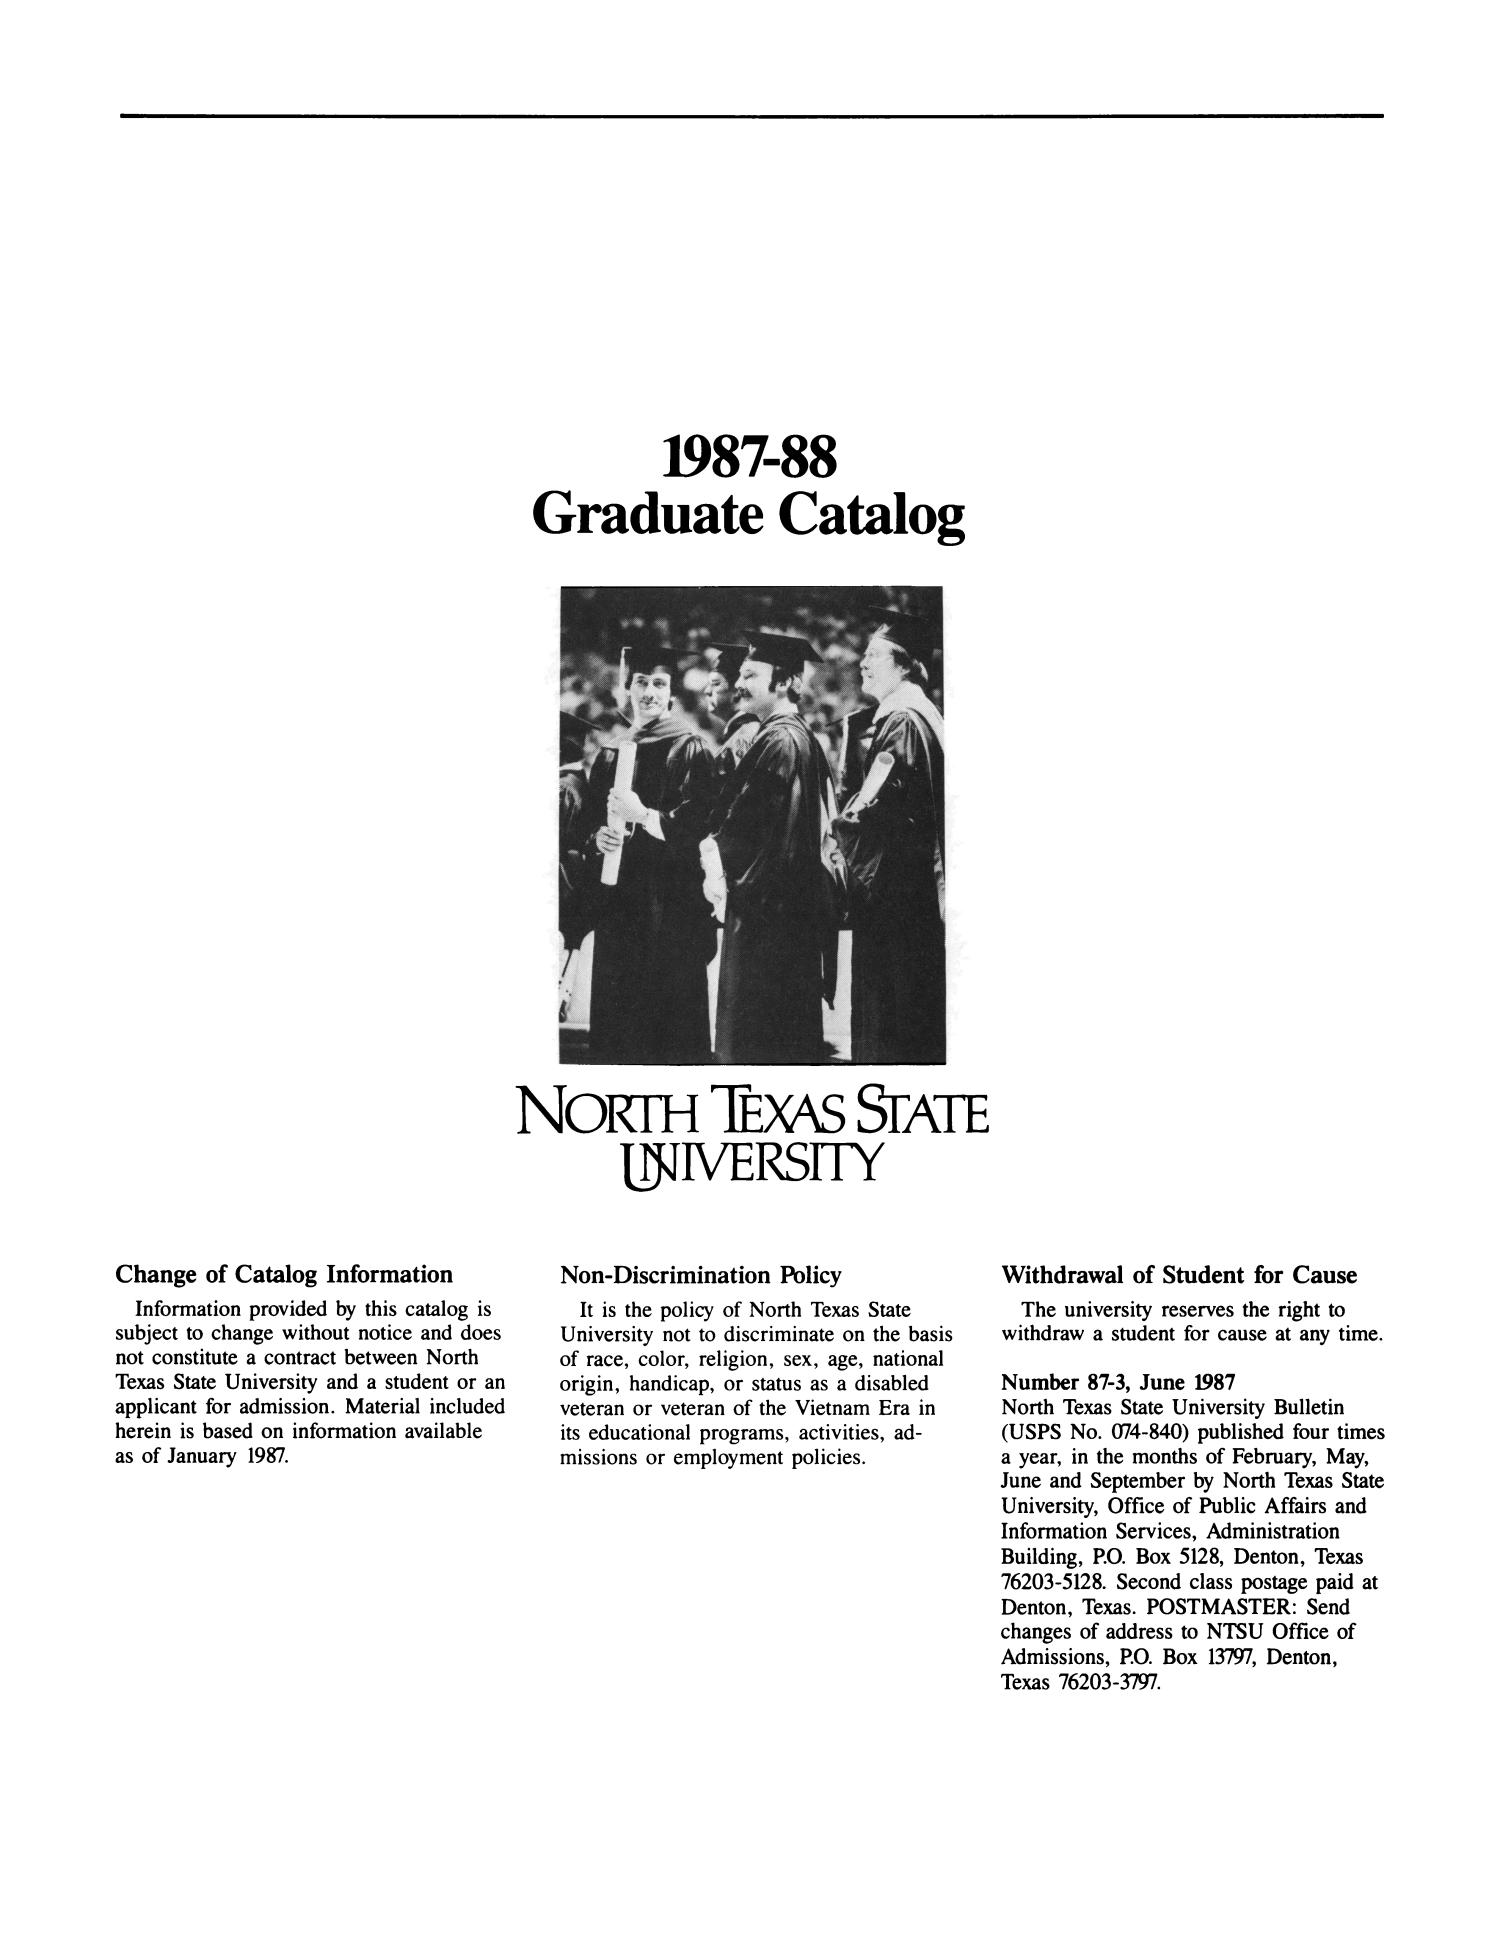 Catalog of North Texas State University, 1987-1988, Graduate
                                                
                                                    1
                                                